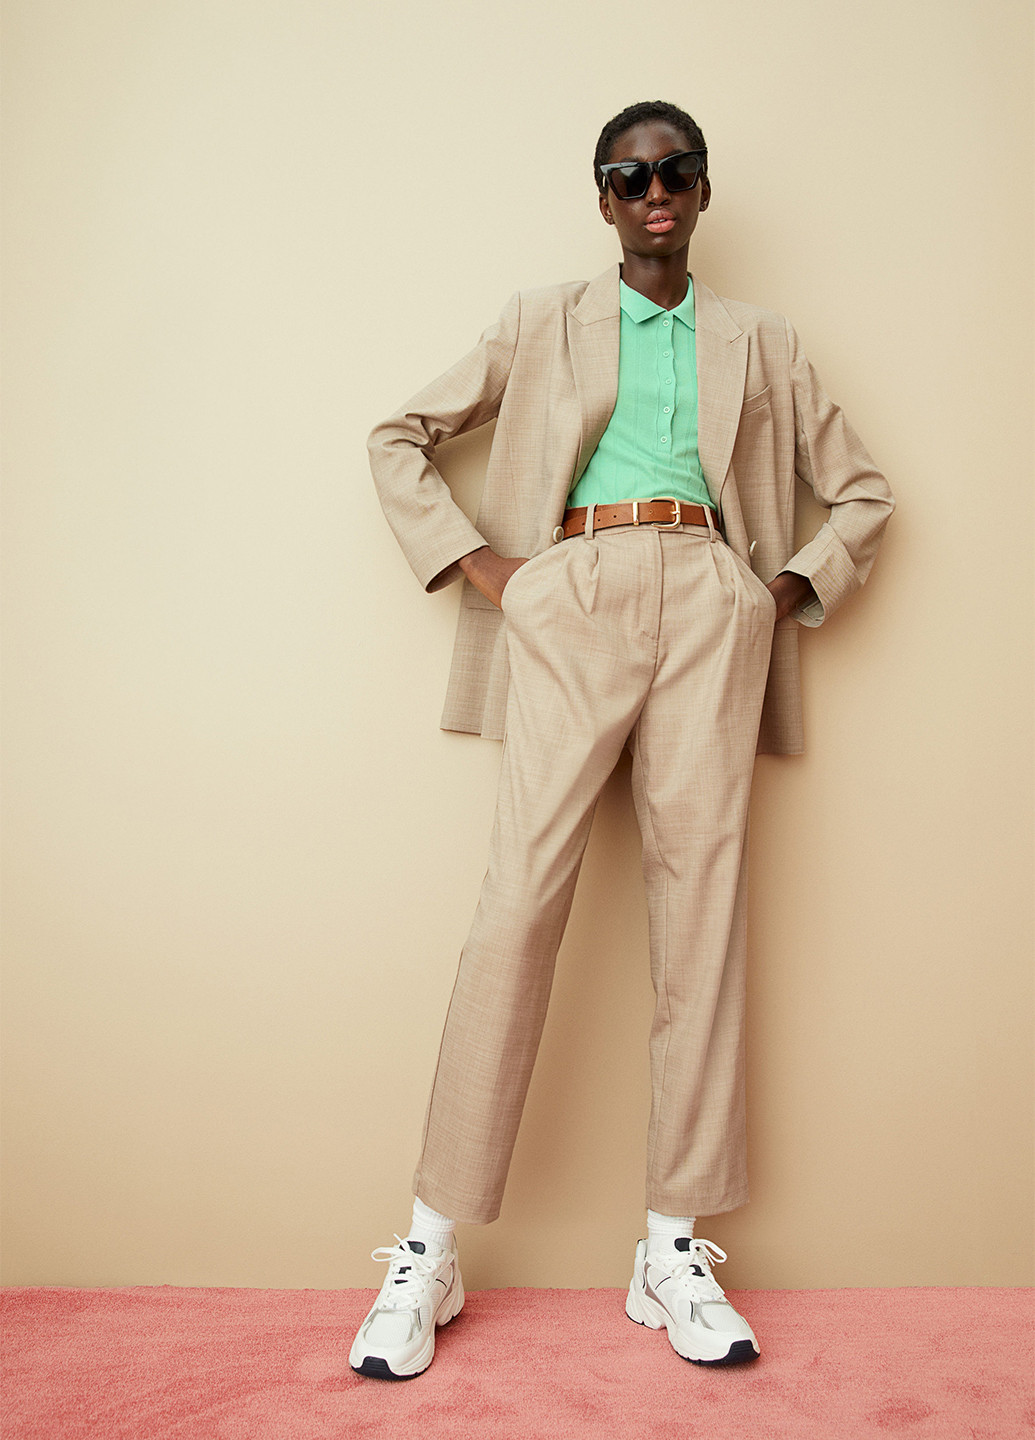 Бежевые классические демисезонные классические брюки H&M